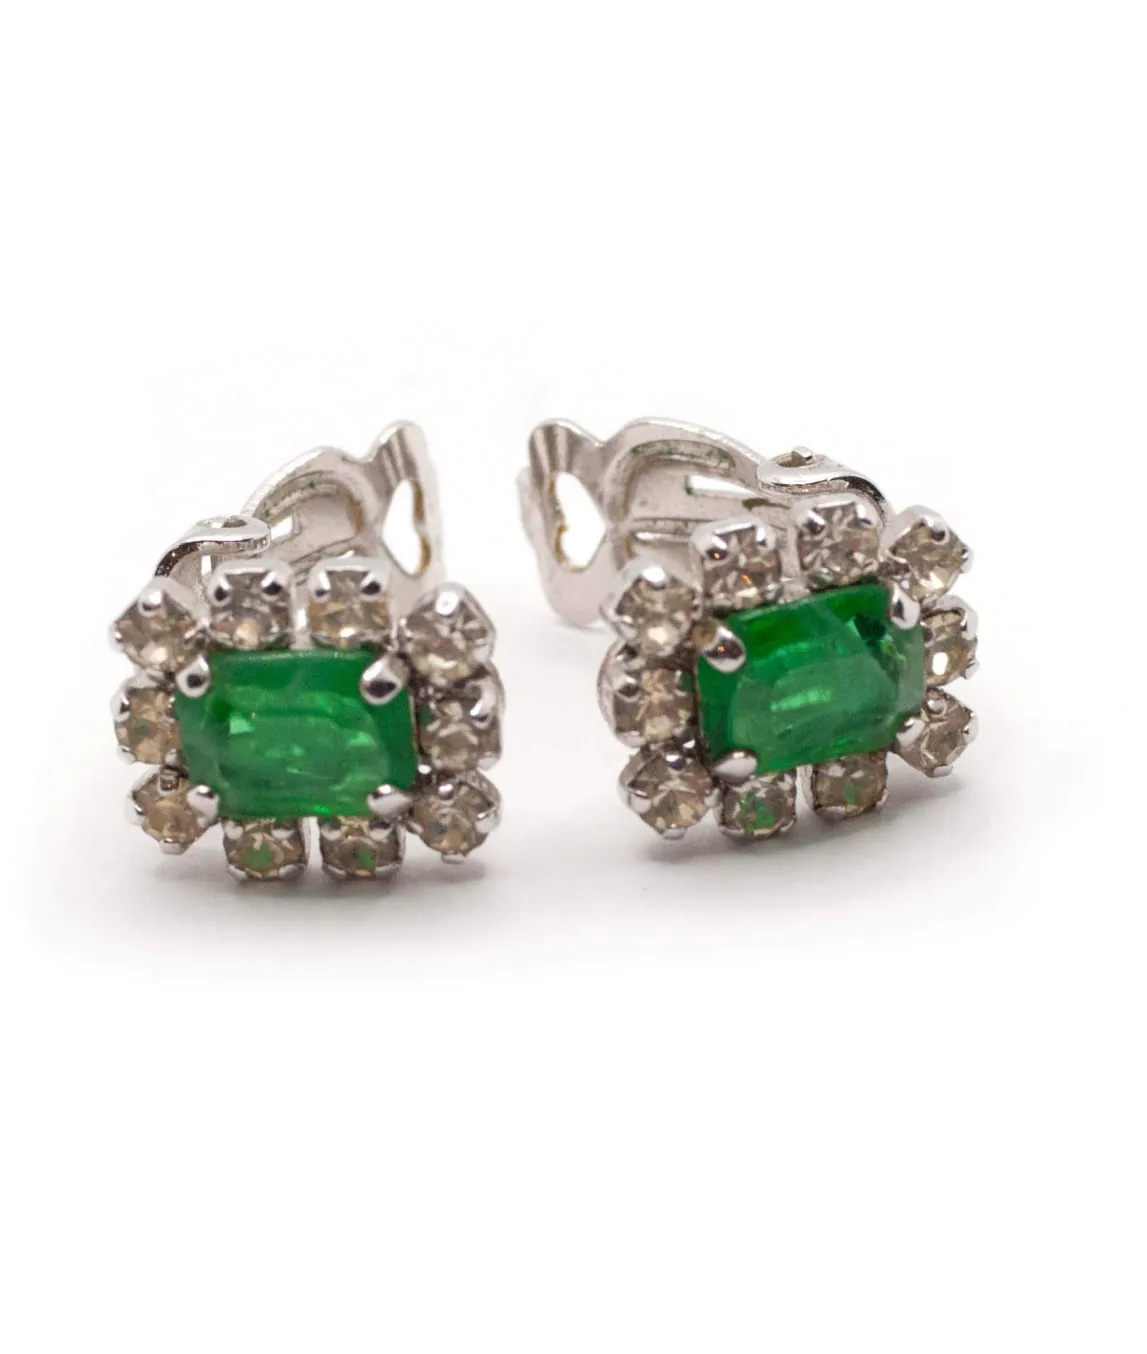 Christian Dior ear clips emerald green glass with clear rhinestone crystals